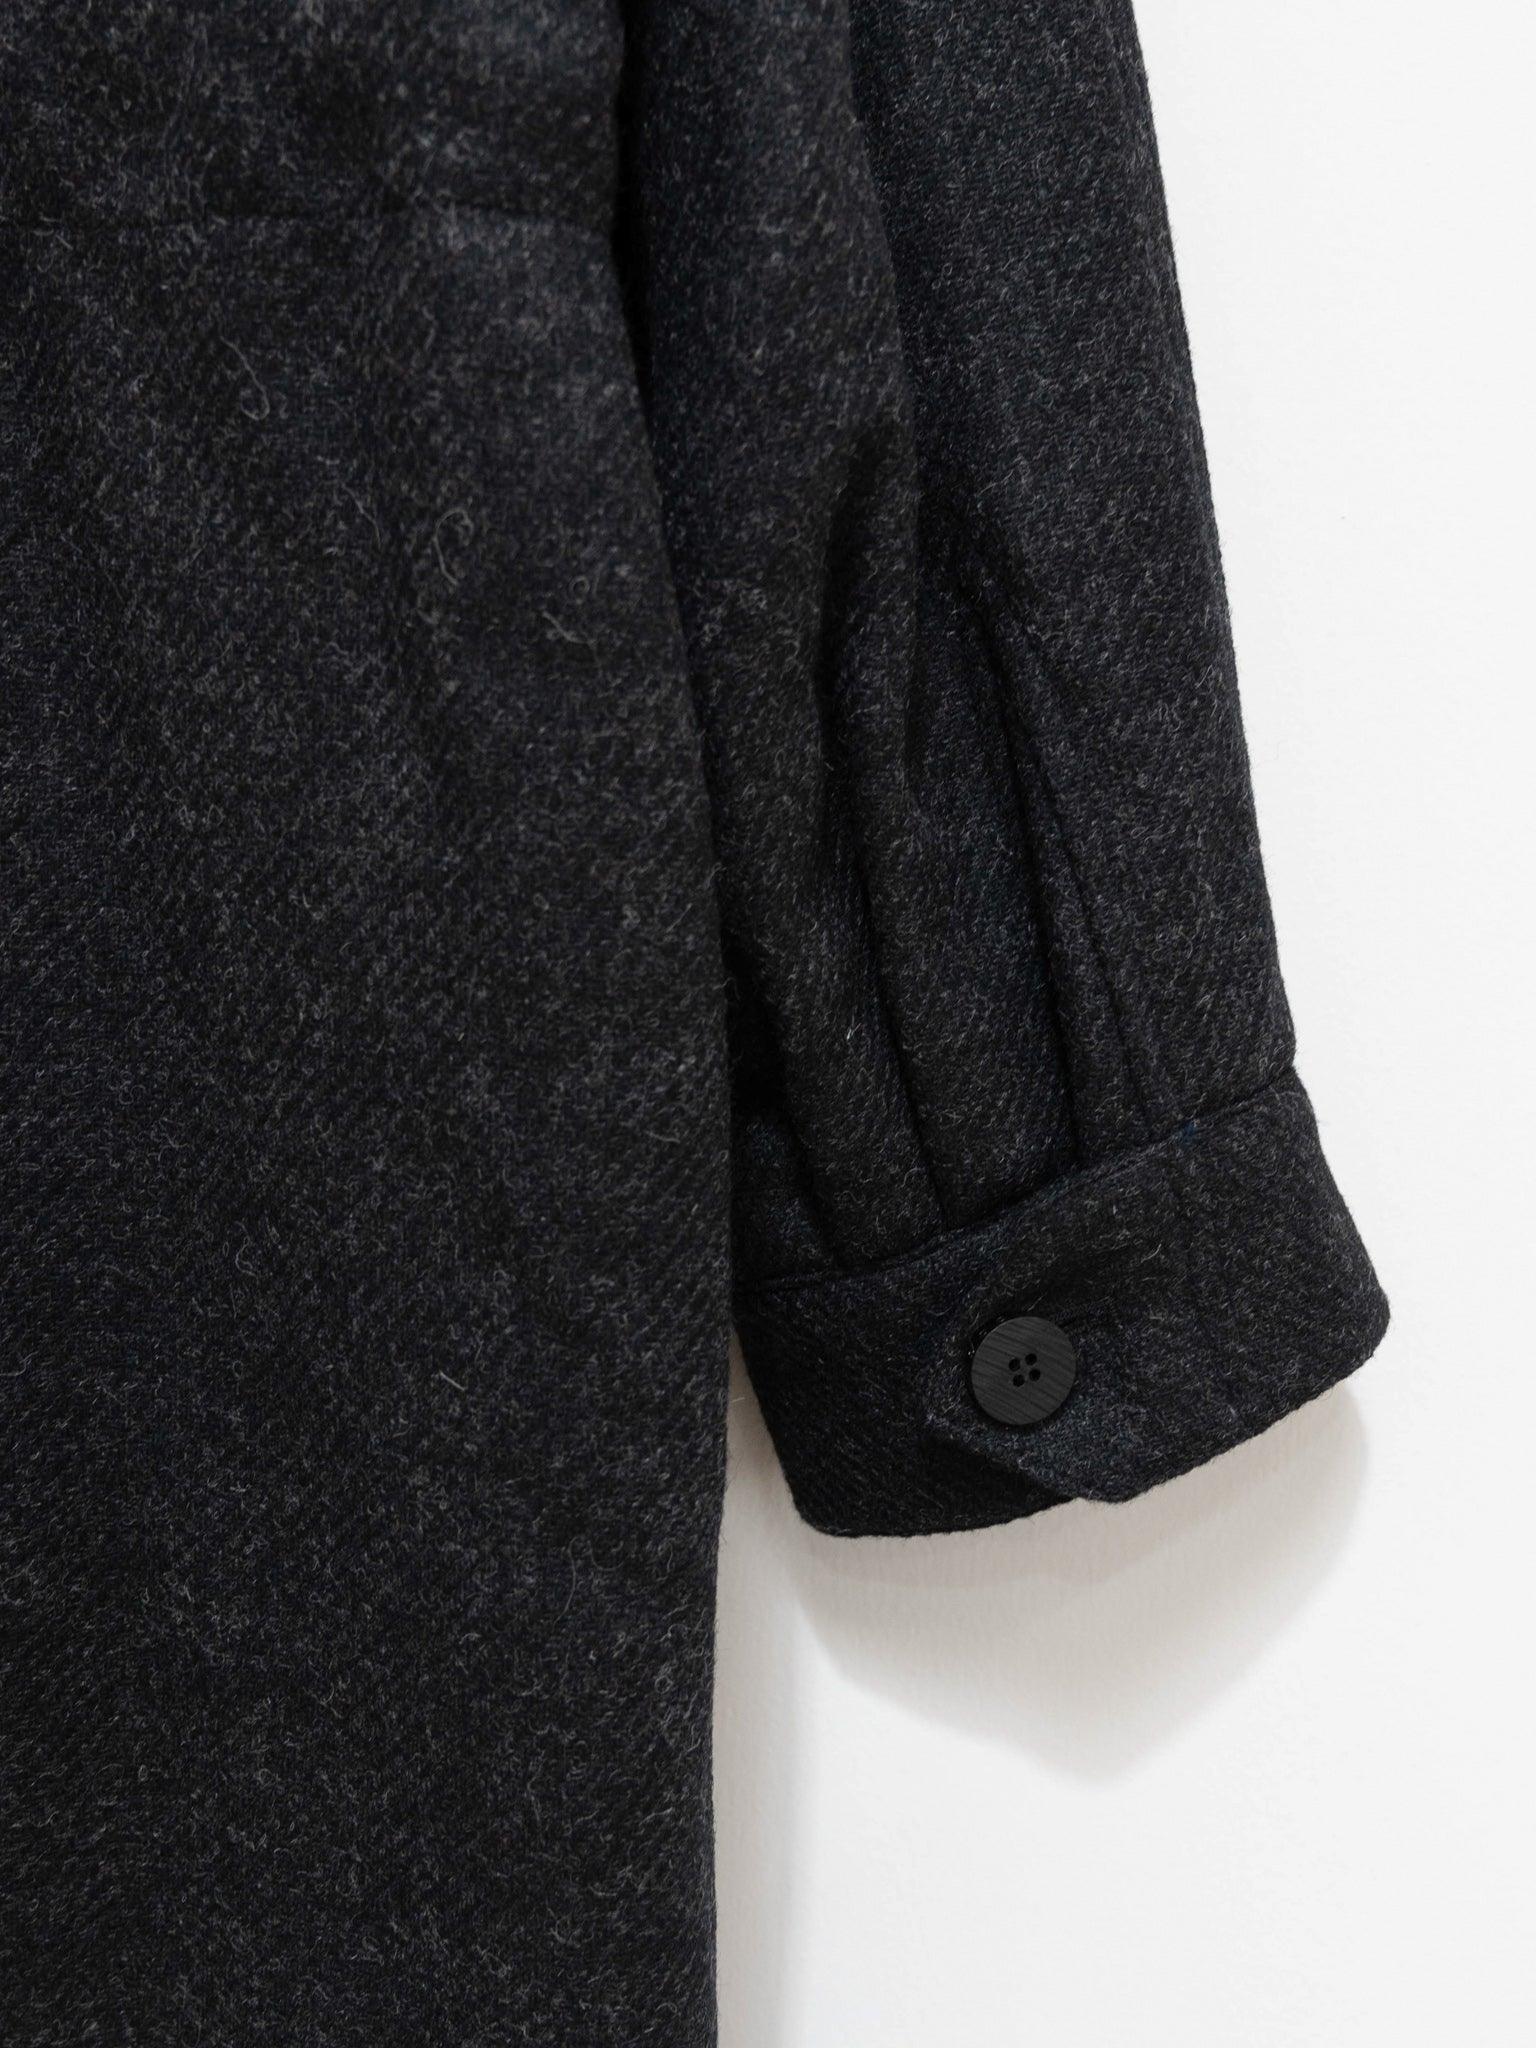 Namu Shop - Document Lightweight Padded Wool Parka - Dark Gray